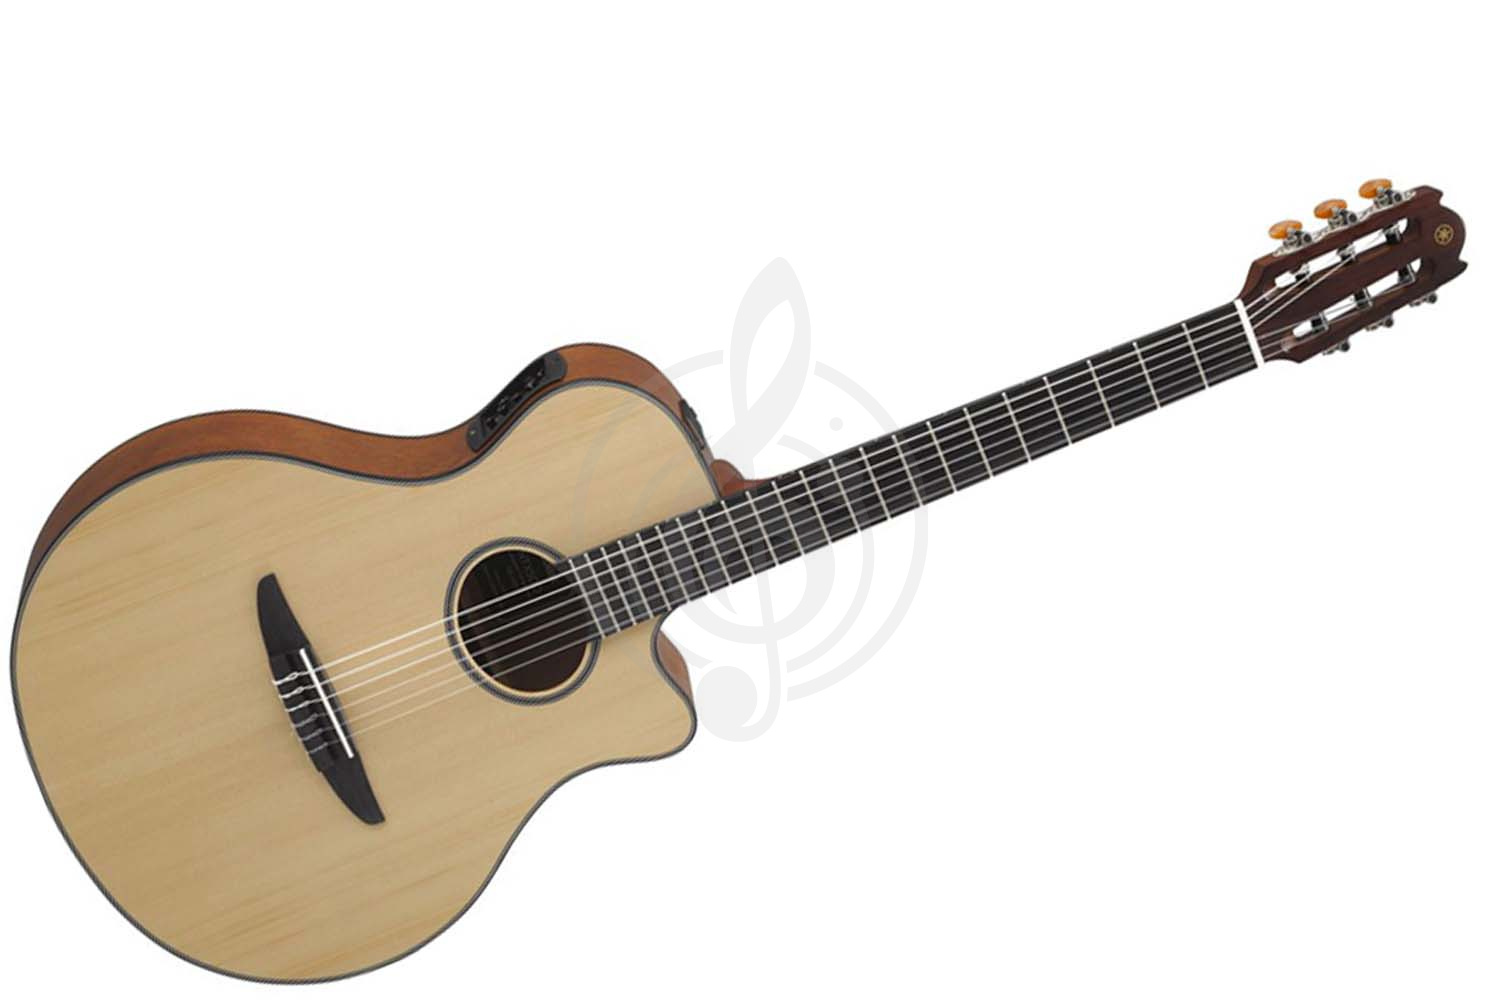 Электроакустическая гитара Электроакустические гитары Yamaha Yamaha NTX500N - электроакустическая гитара, струны нейлон, цвет NATURAL NTX500N - фото 1